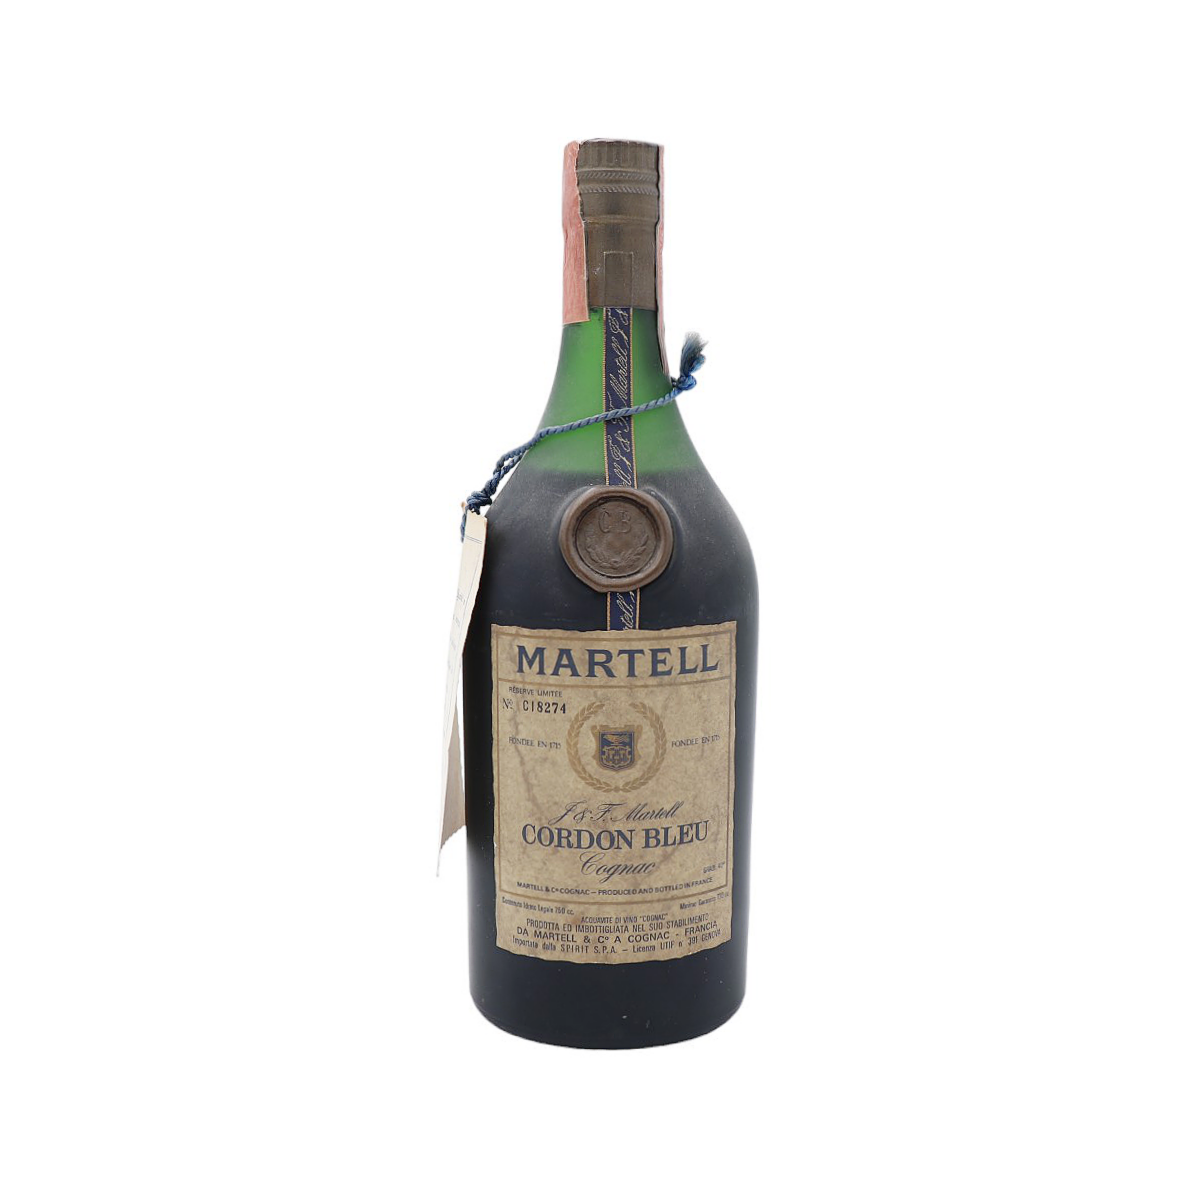 Martell Cognac Cordon Bleu 1976 - Inescapable Bottle